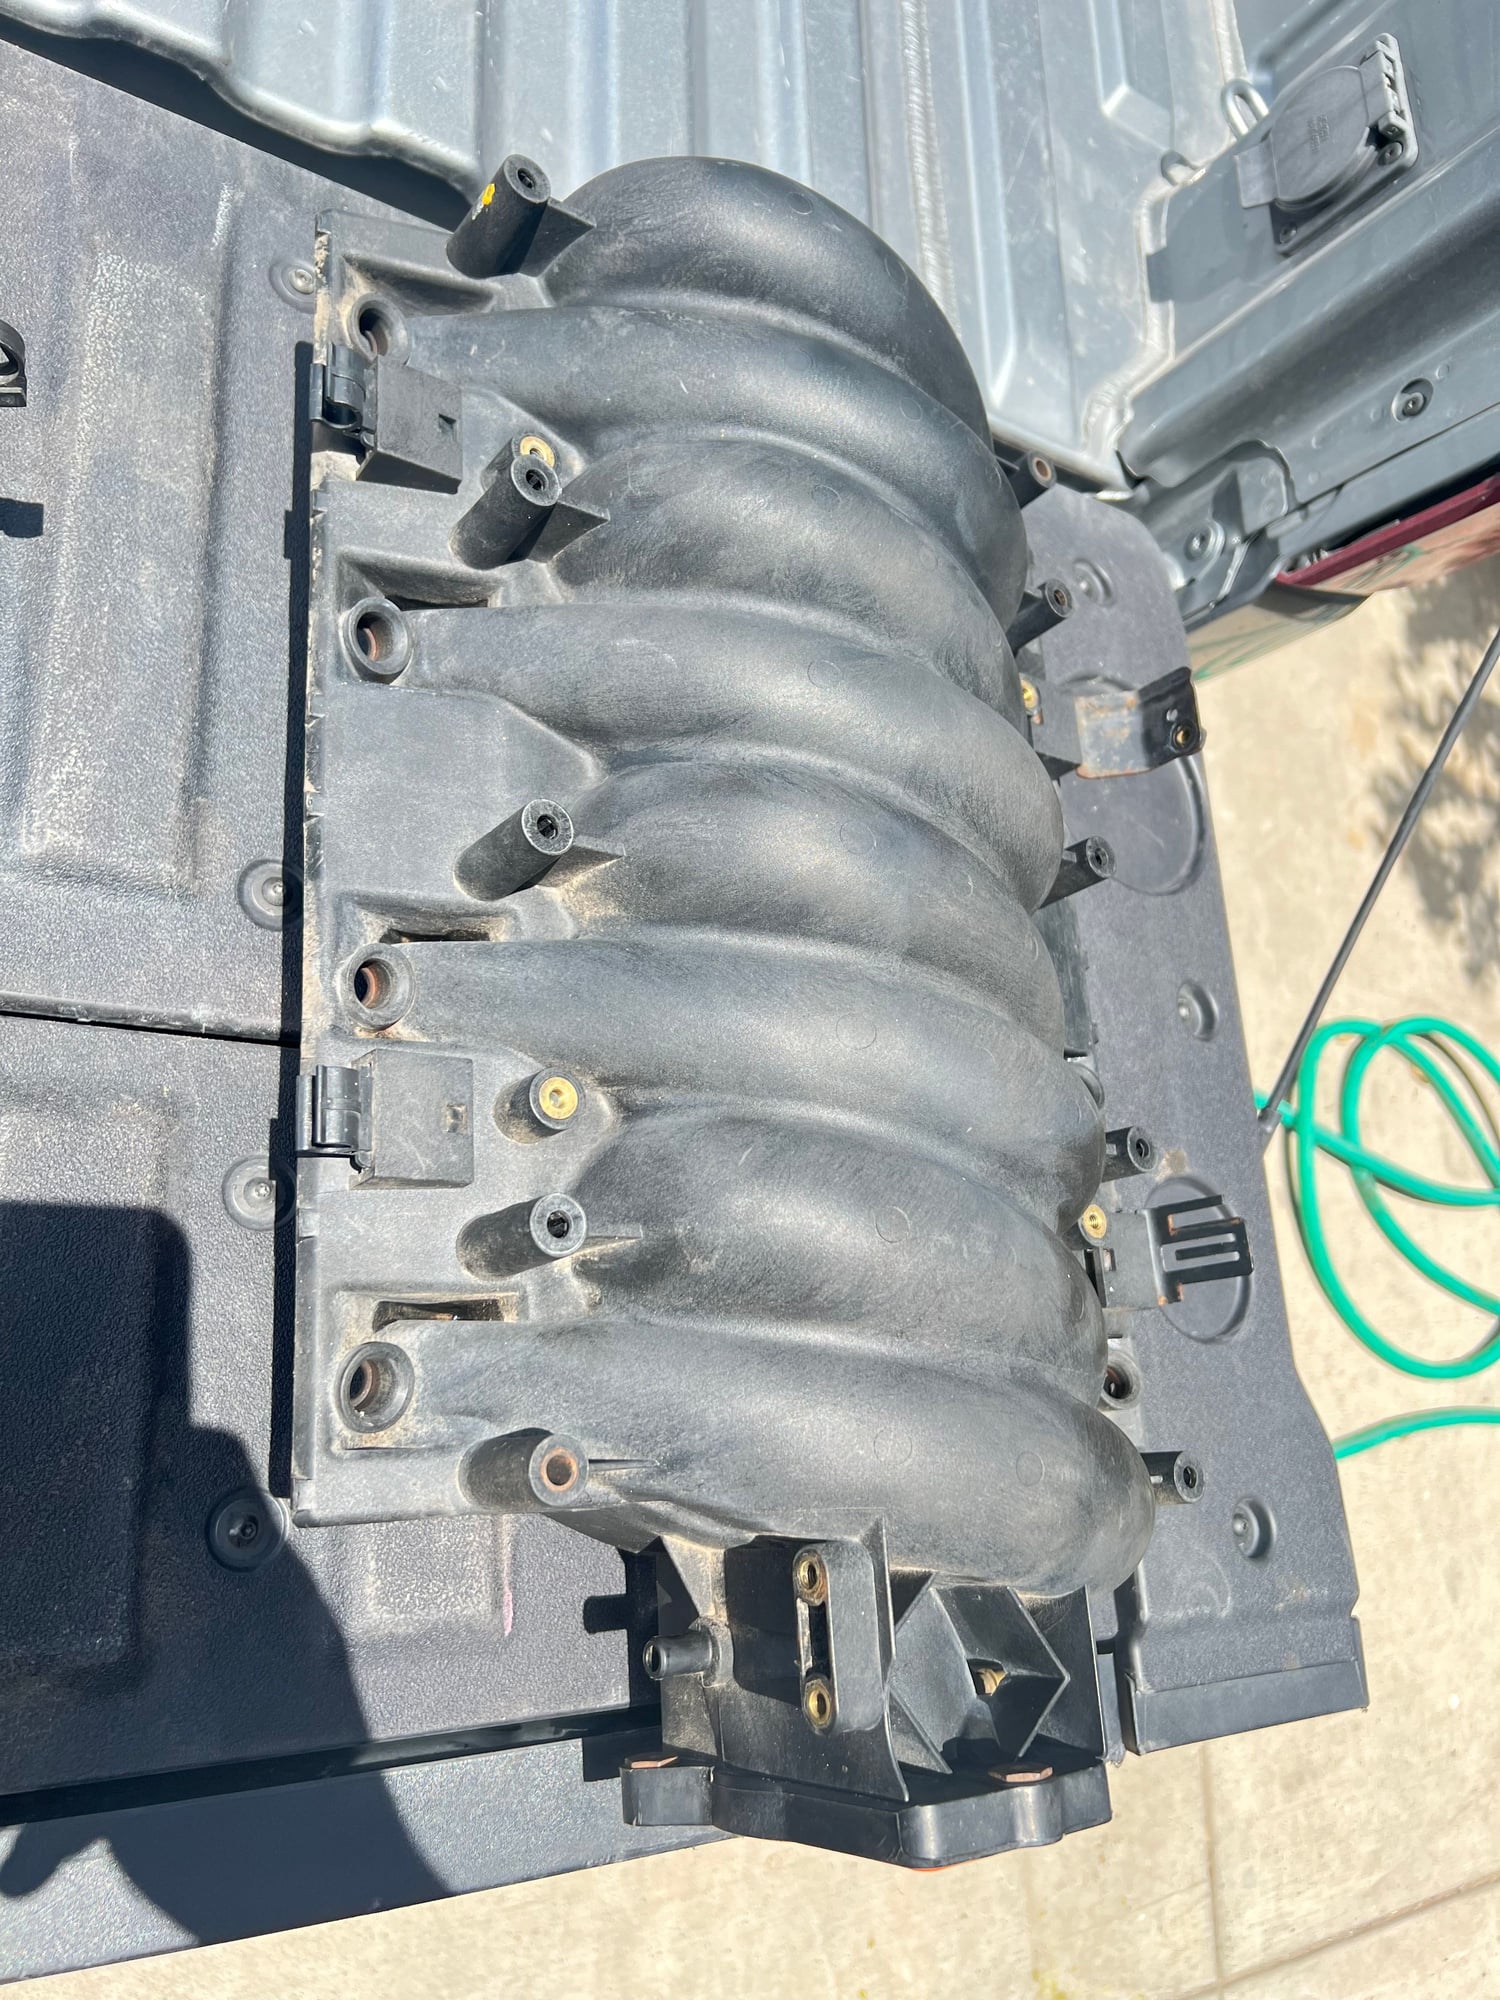 Engine - Intake/Fuel - Ls6 intake and ls3 intake - Used - Mcallen, TX 78503, United States